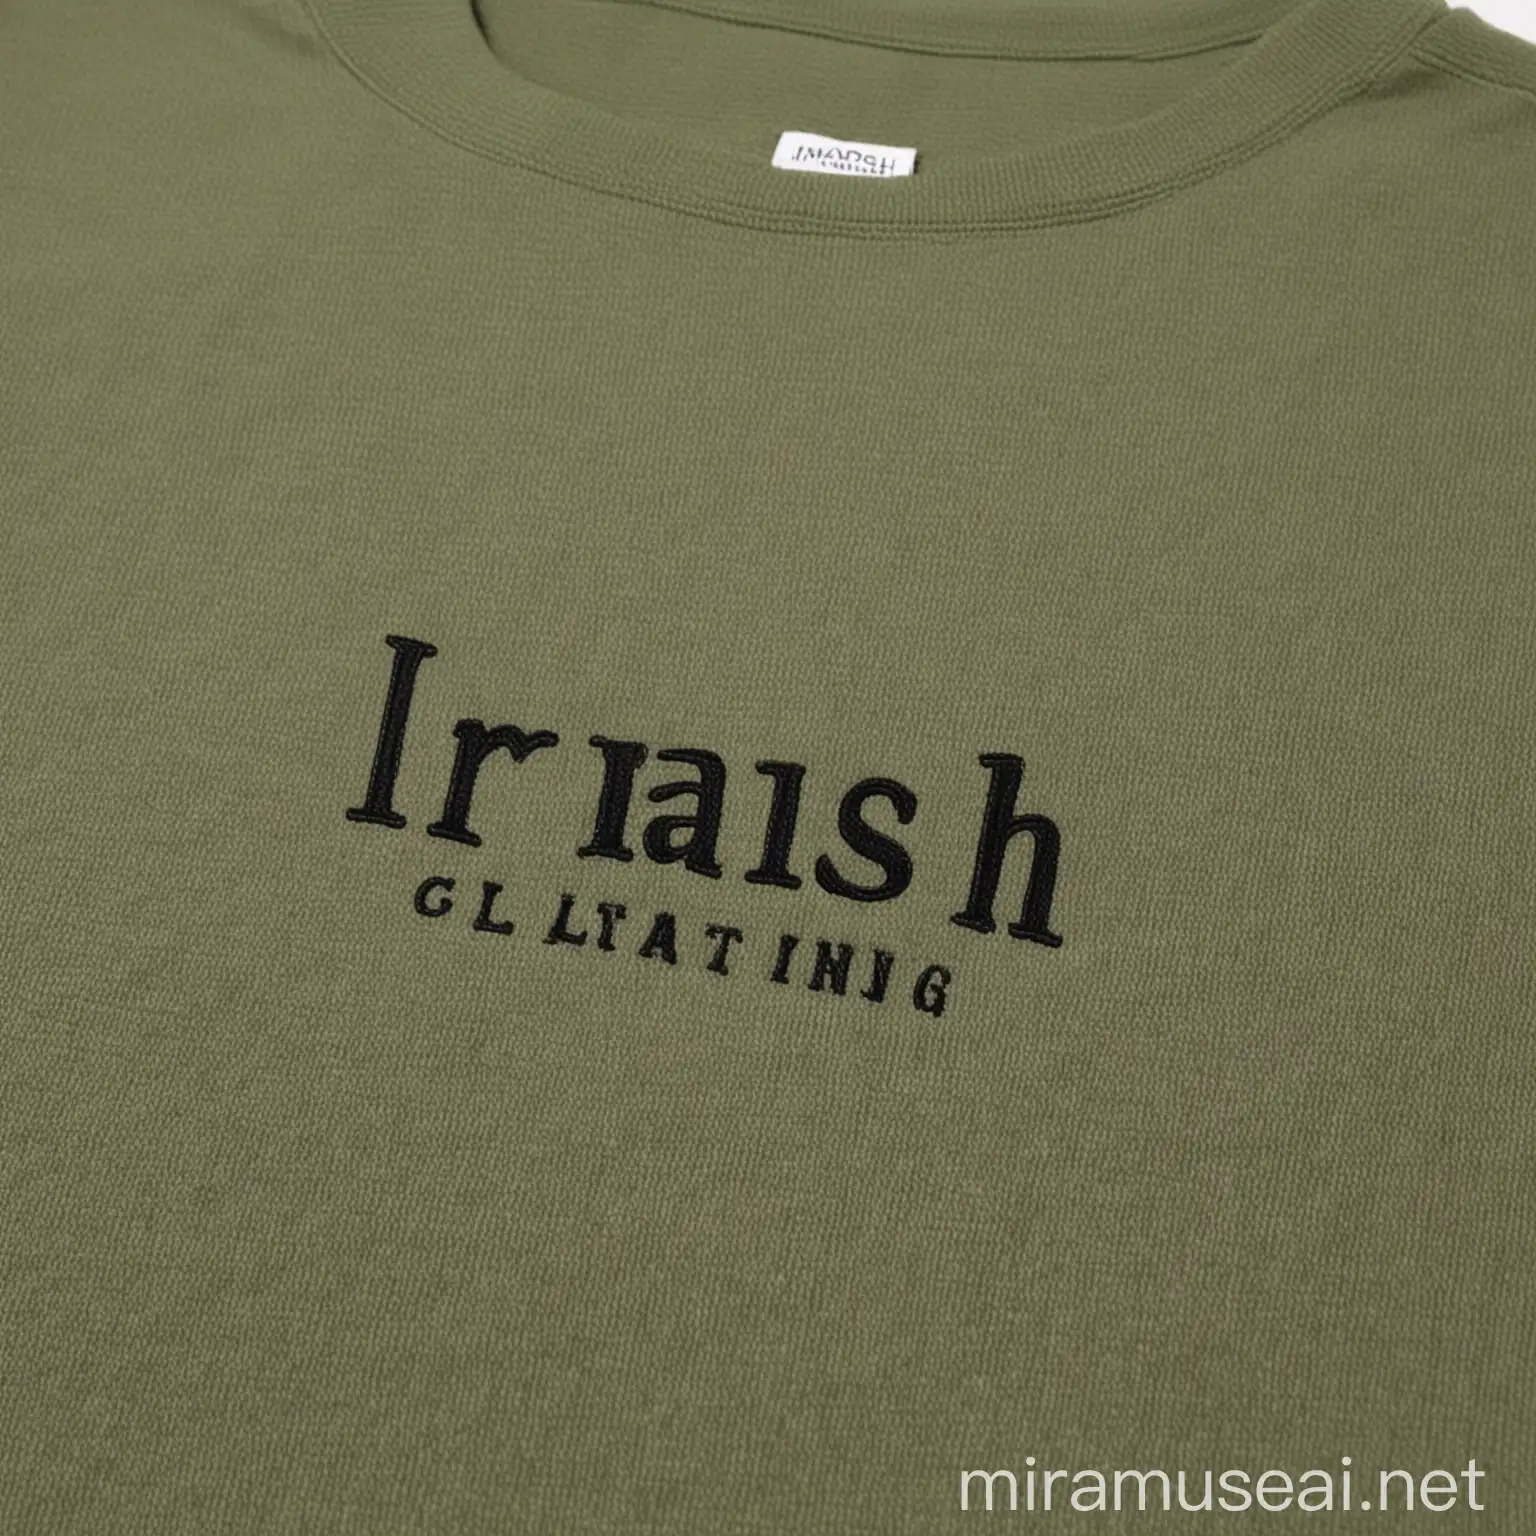 Marsh clothing brand